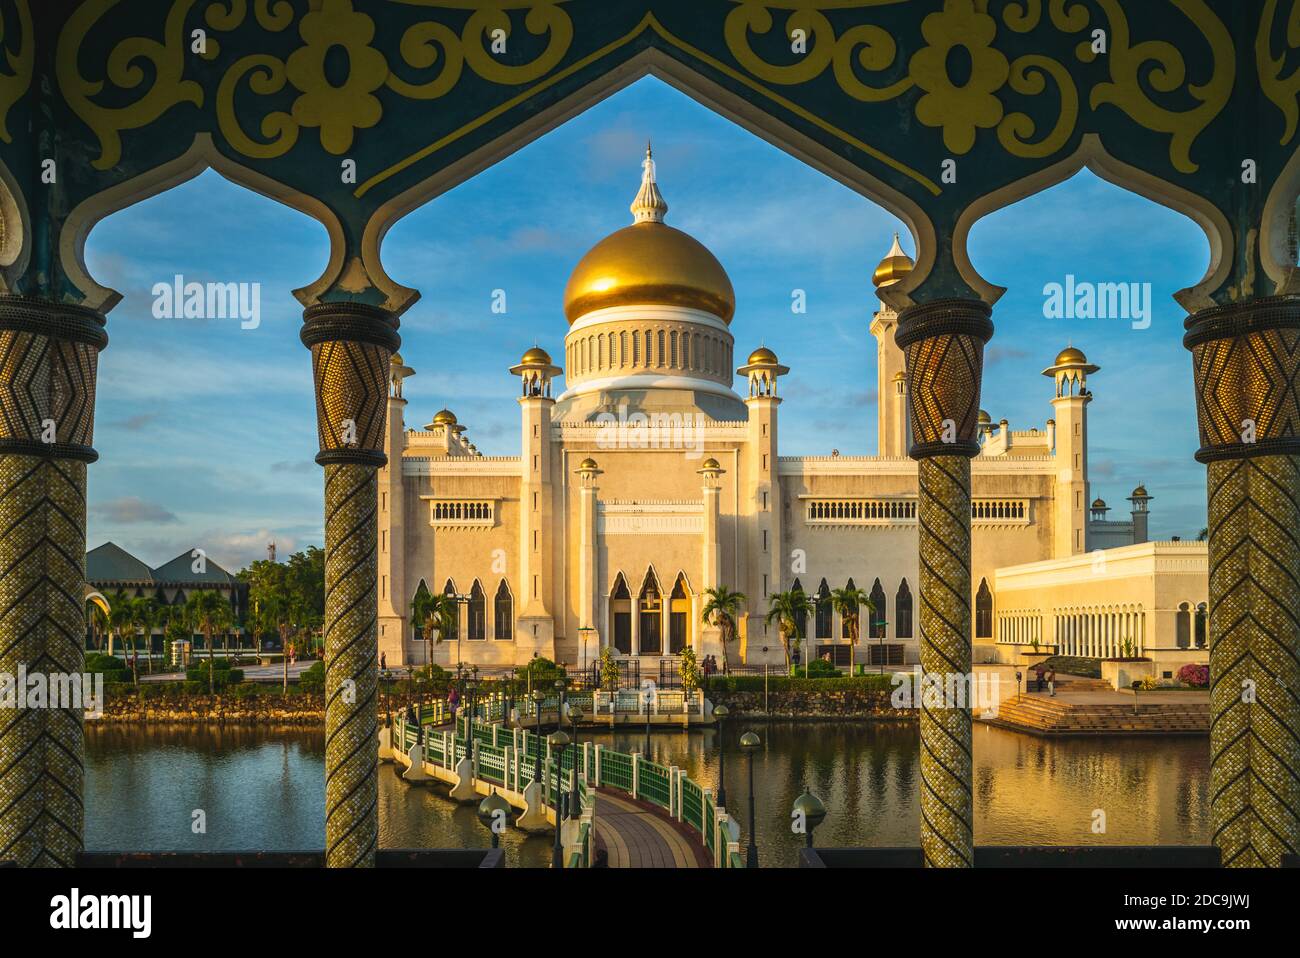 Omar Ali Saifuddien Mosque in Bandar Seri Begawan, brunei Stock Photo